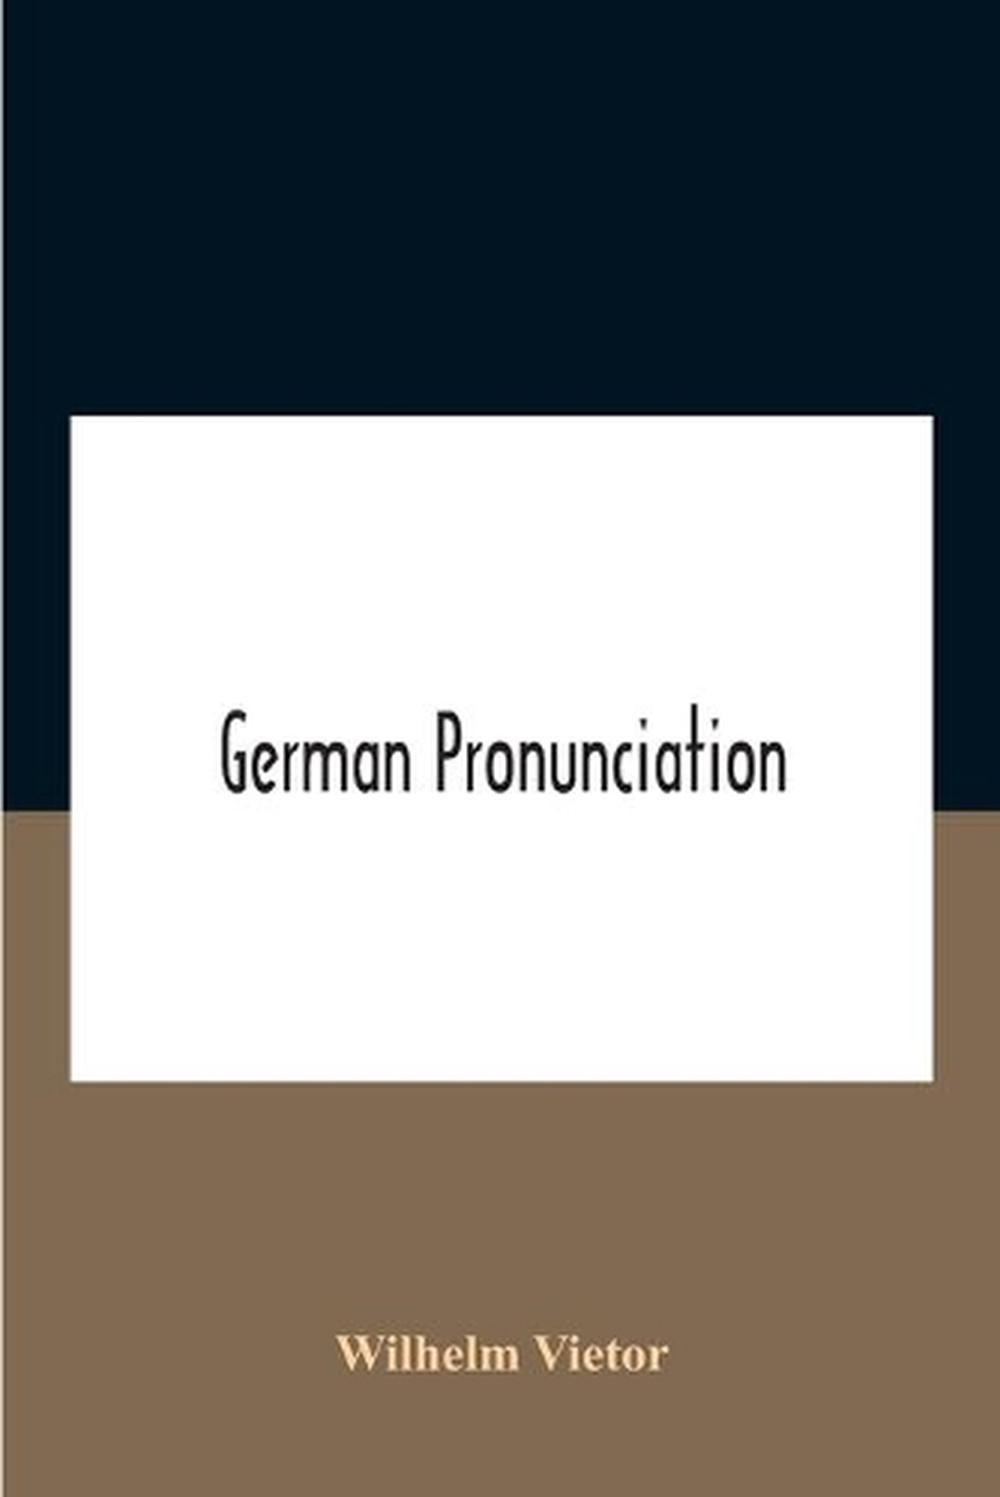 German Pronunciation by Wilhelm Vietor (English) Paperback Book Free ...